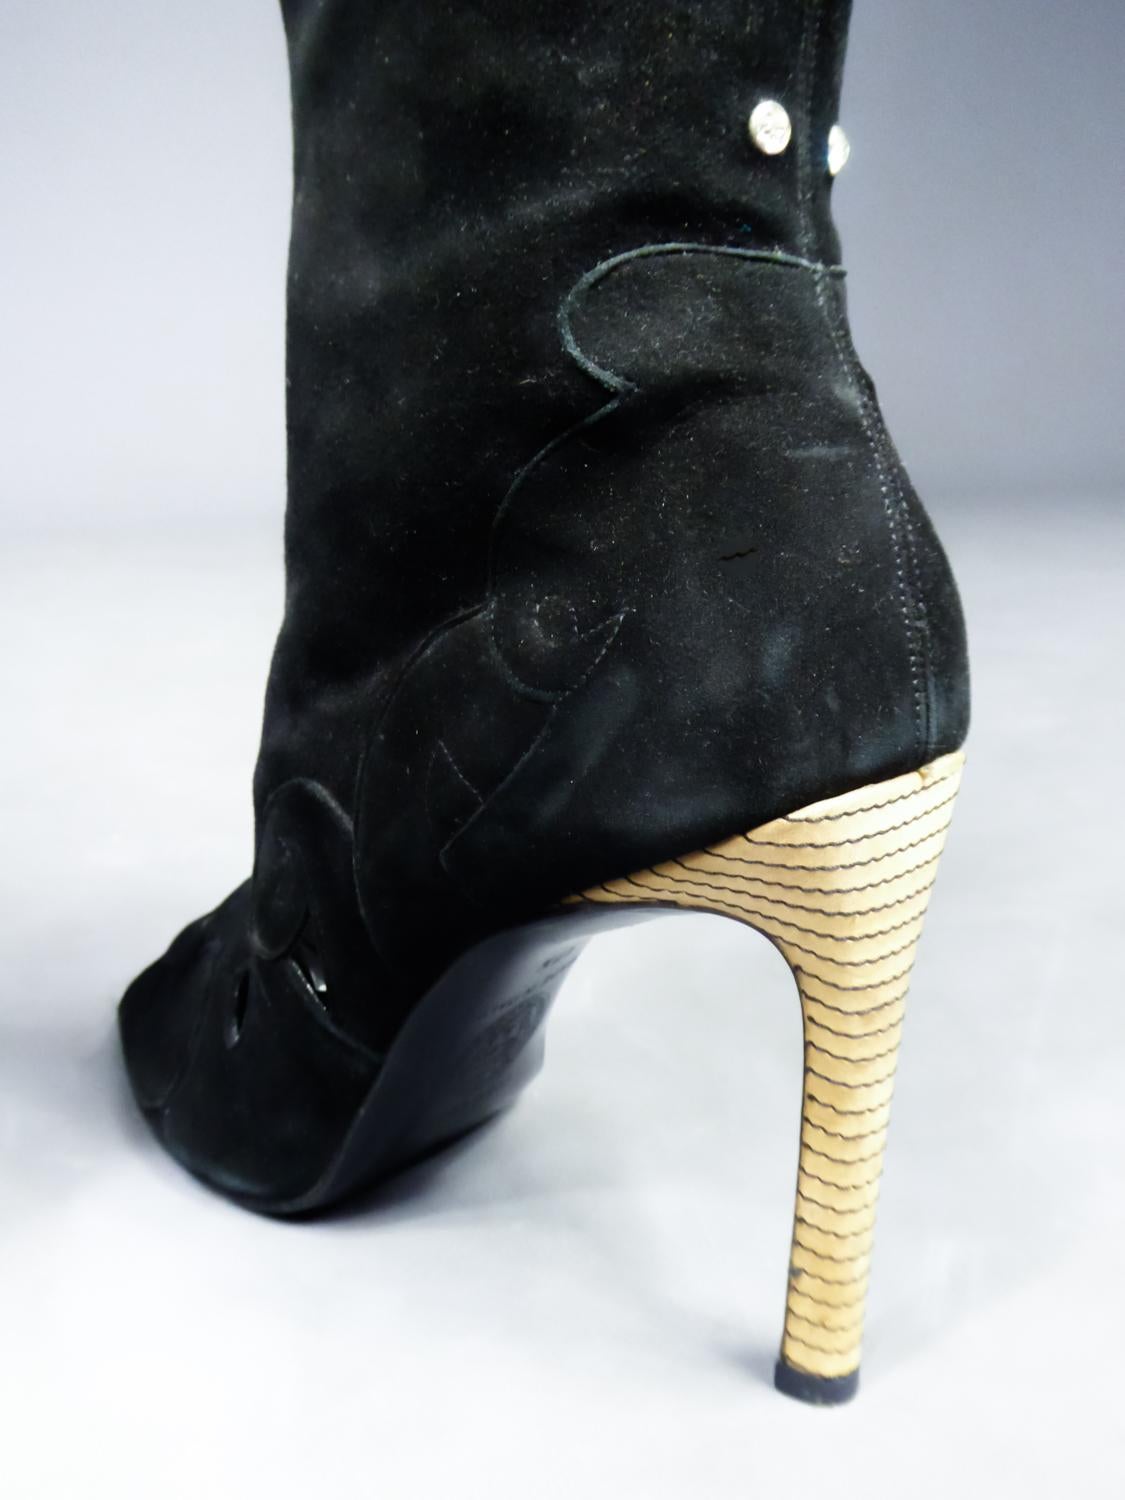 Gianni Versace Boots in Suede and Swarovski Rhinestone Circa 2000 For Sale 2